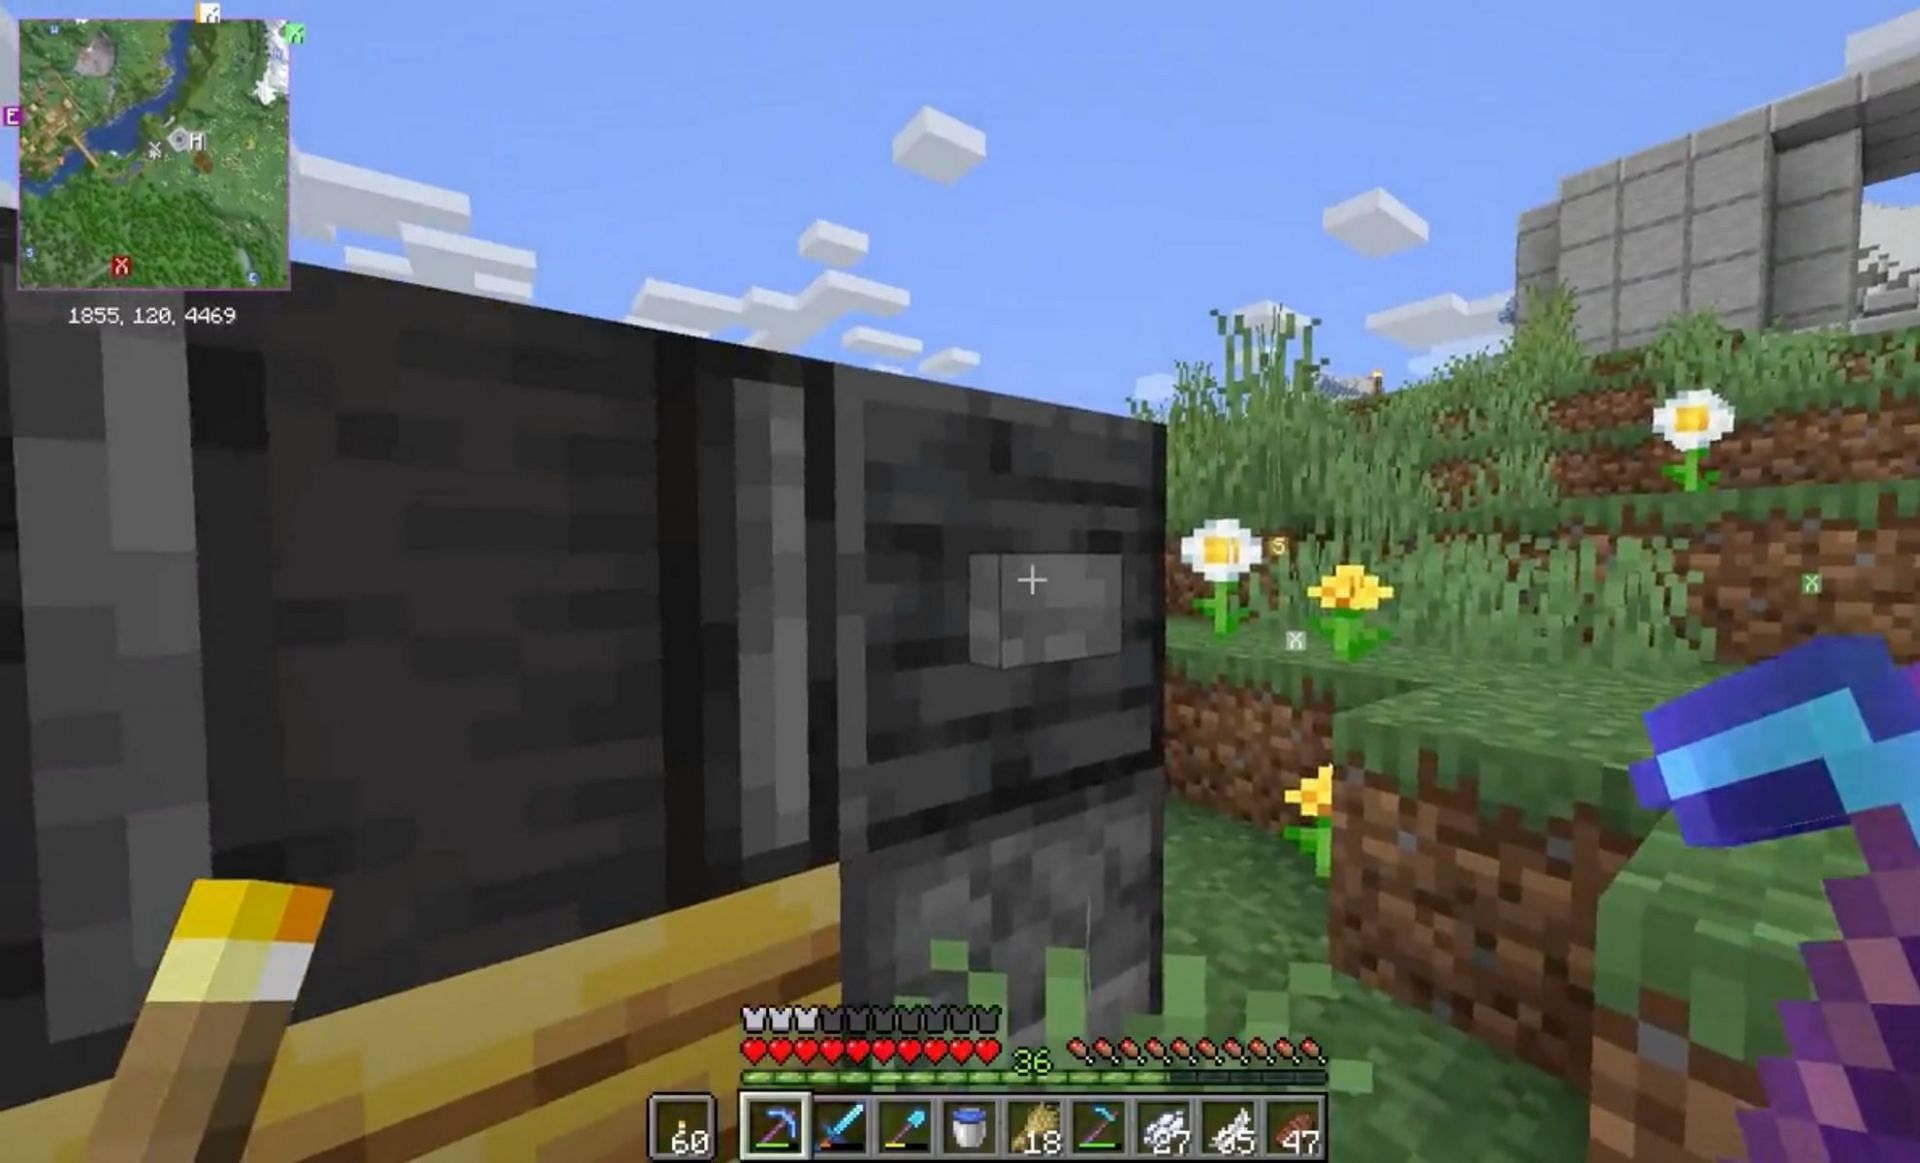 The death button in Minecraft (Image via u/Paredes0 on Reddit)